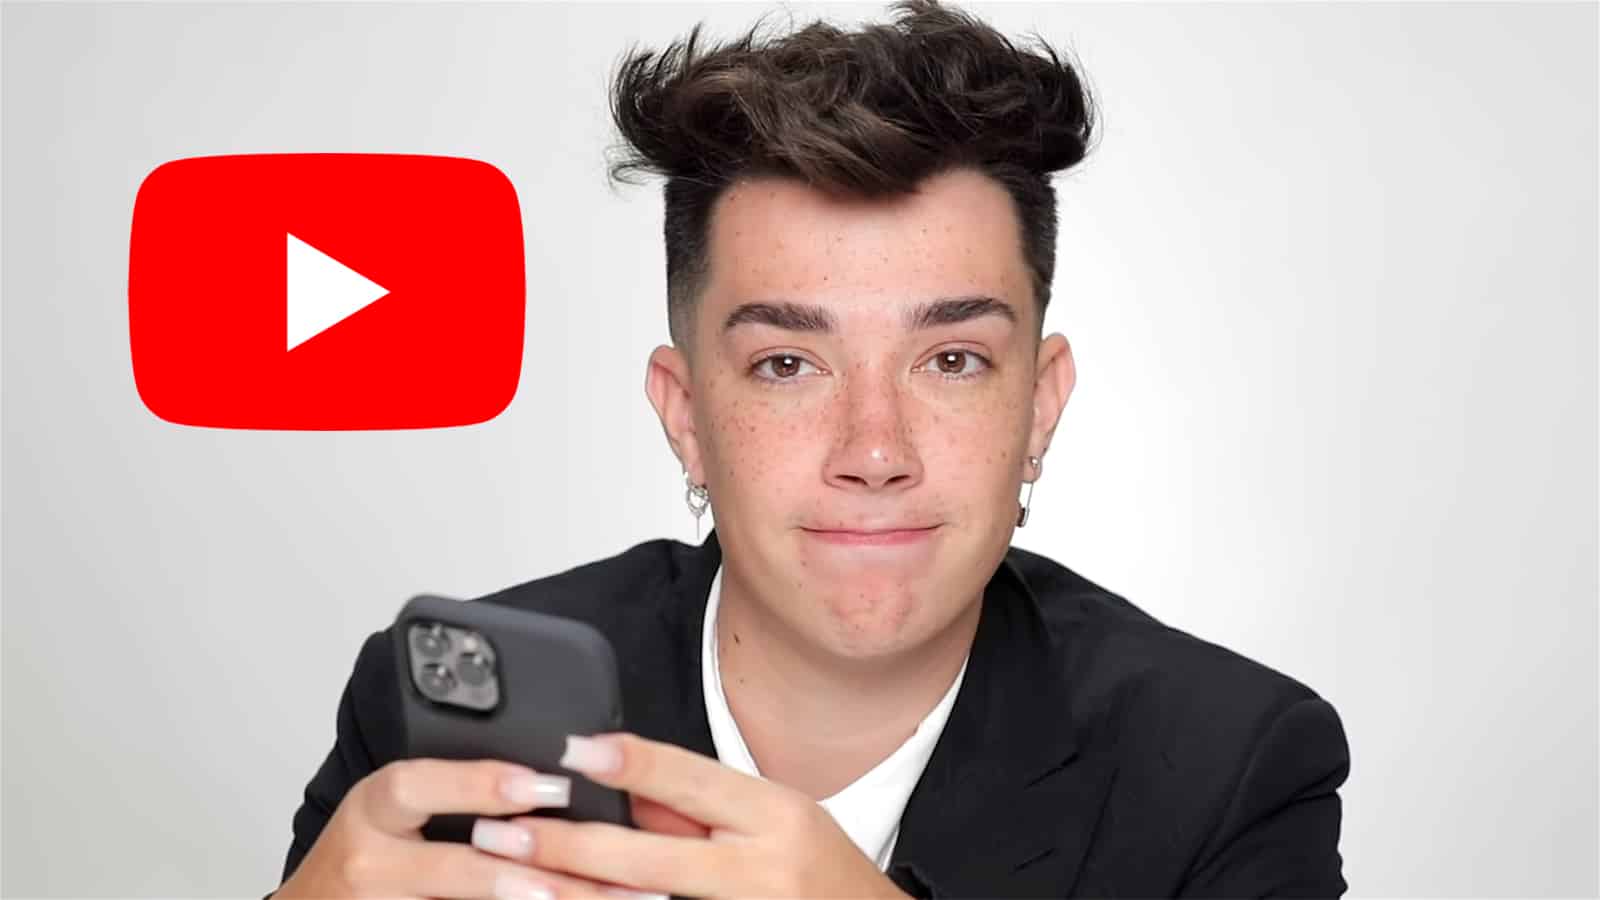 James Charles next to the YouTube logo